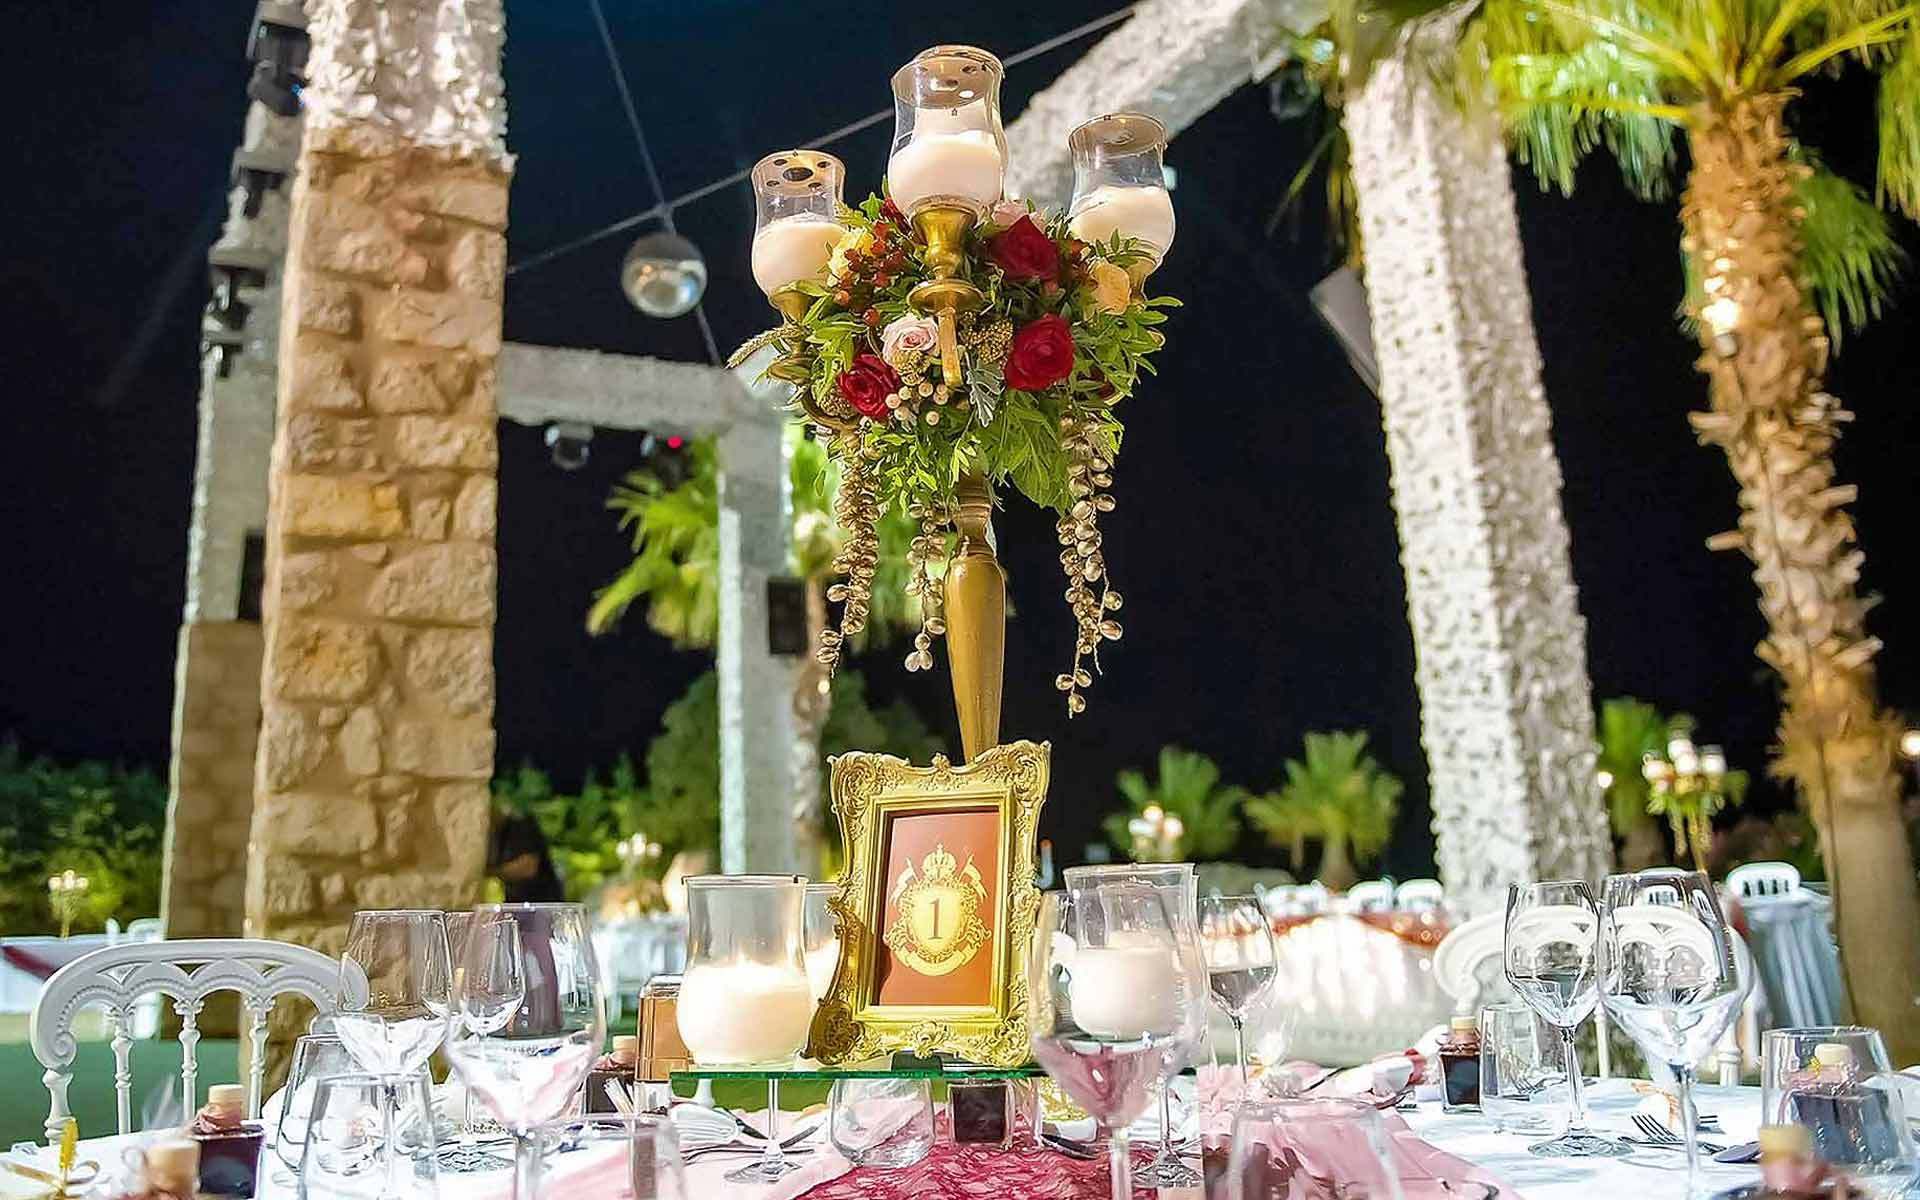 Byzantine Candle Holder theme wedding decoration in Monemvasia, ktima Petra by Rogdaki Events Trademark